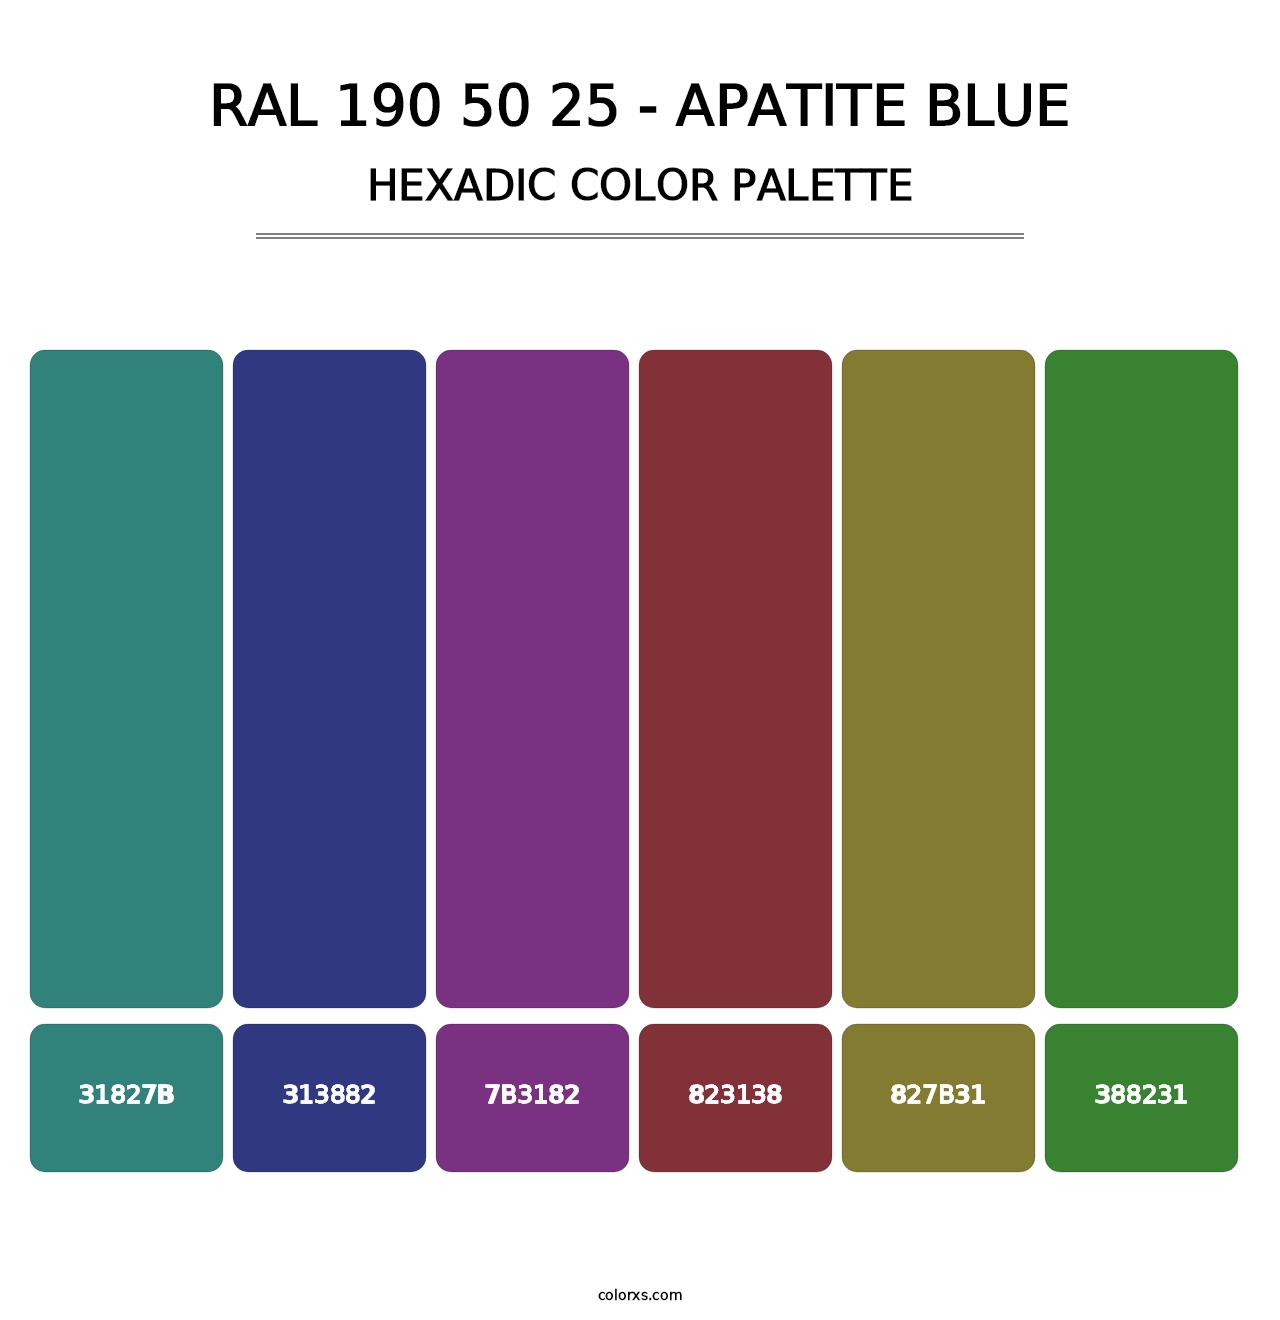 RAL 190 50 25 - Apatite Blue - Hexadic Color Palette